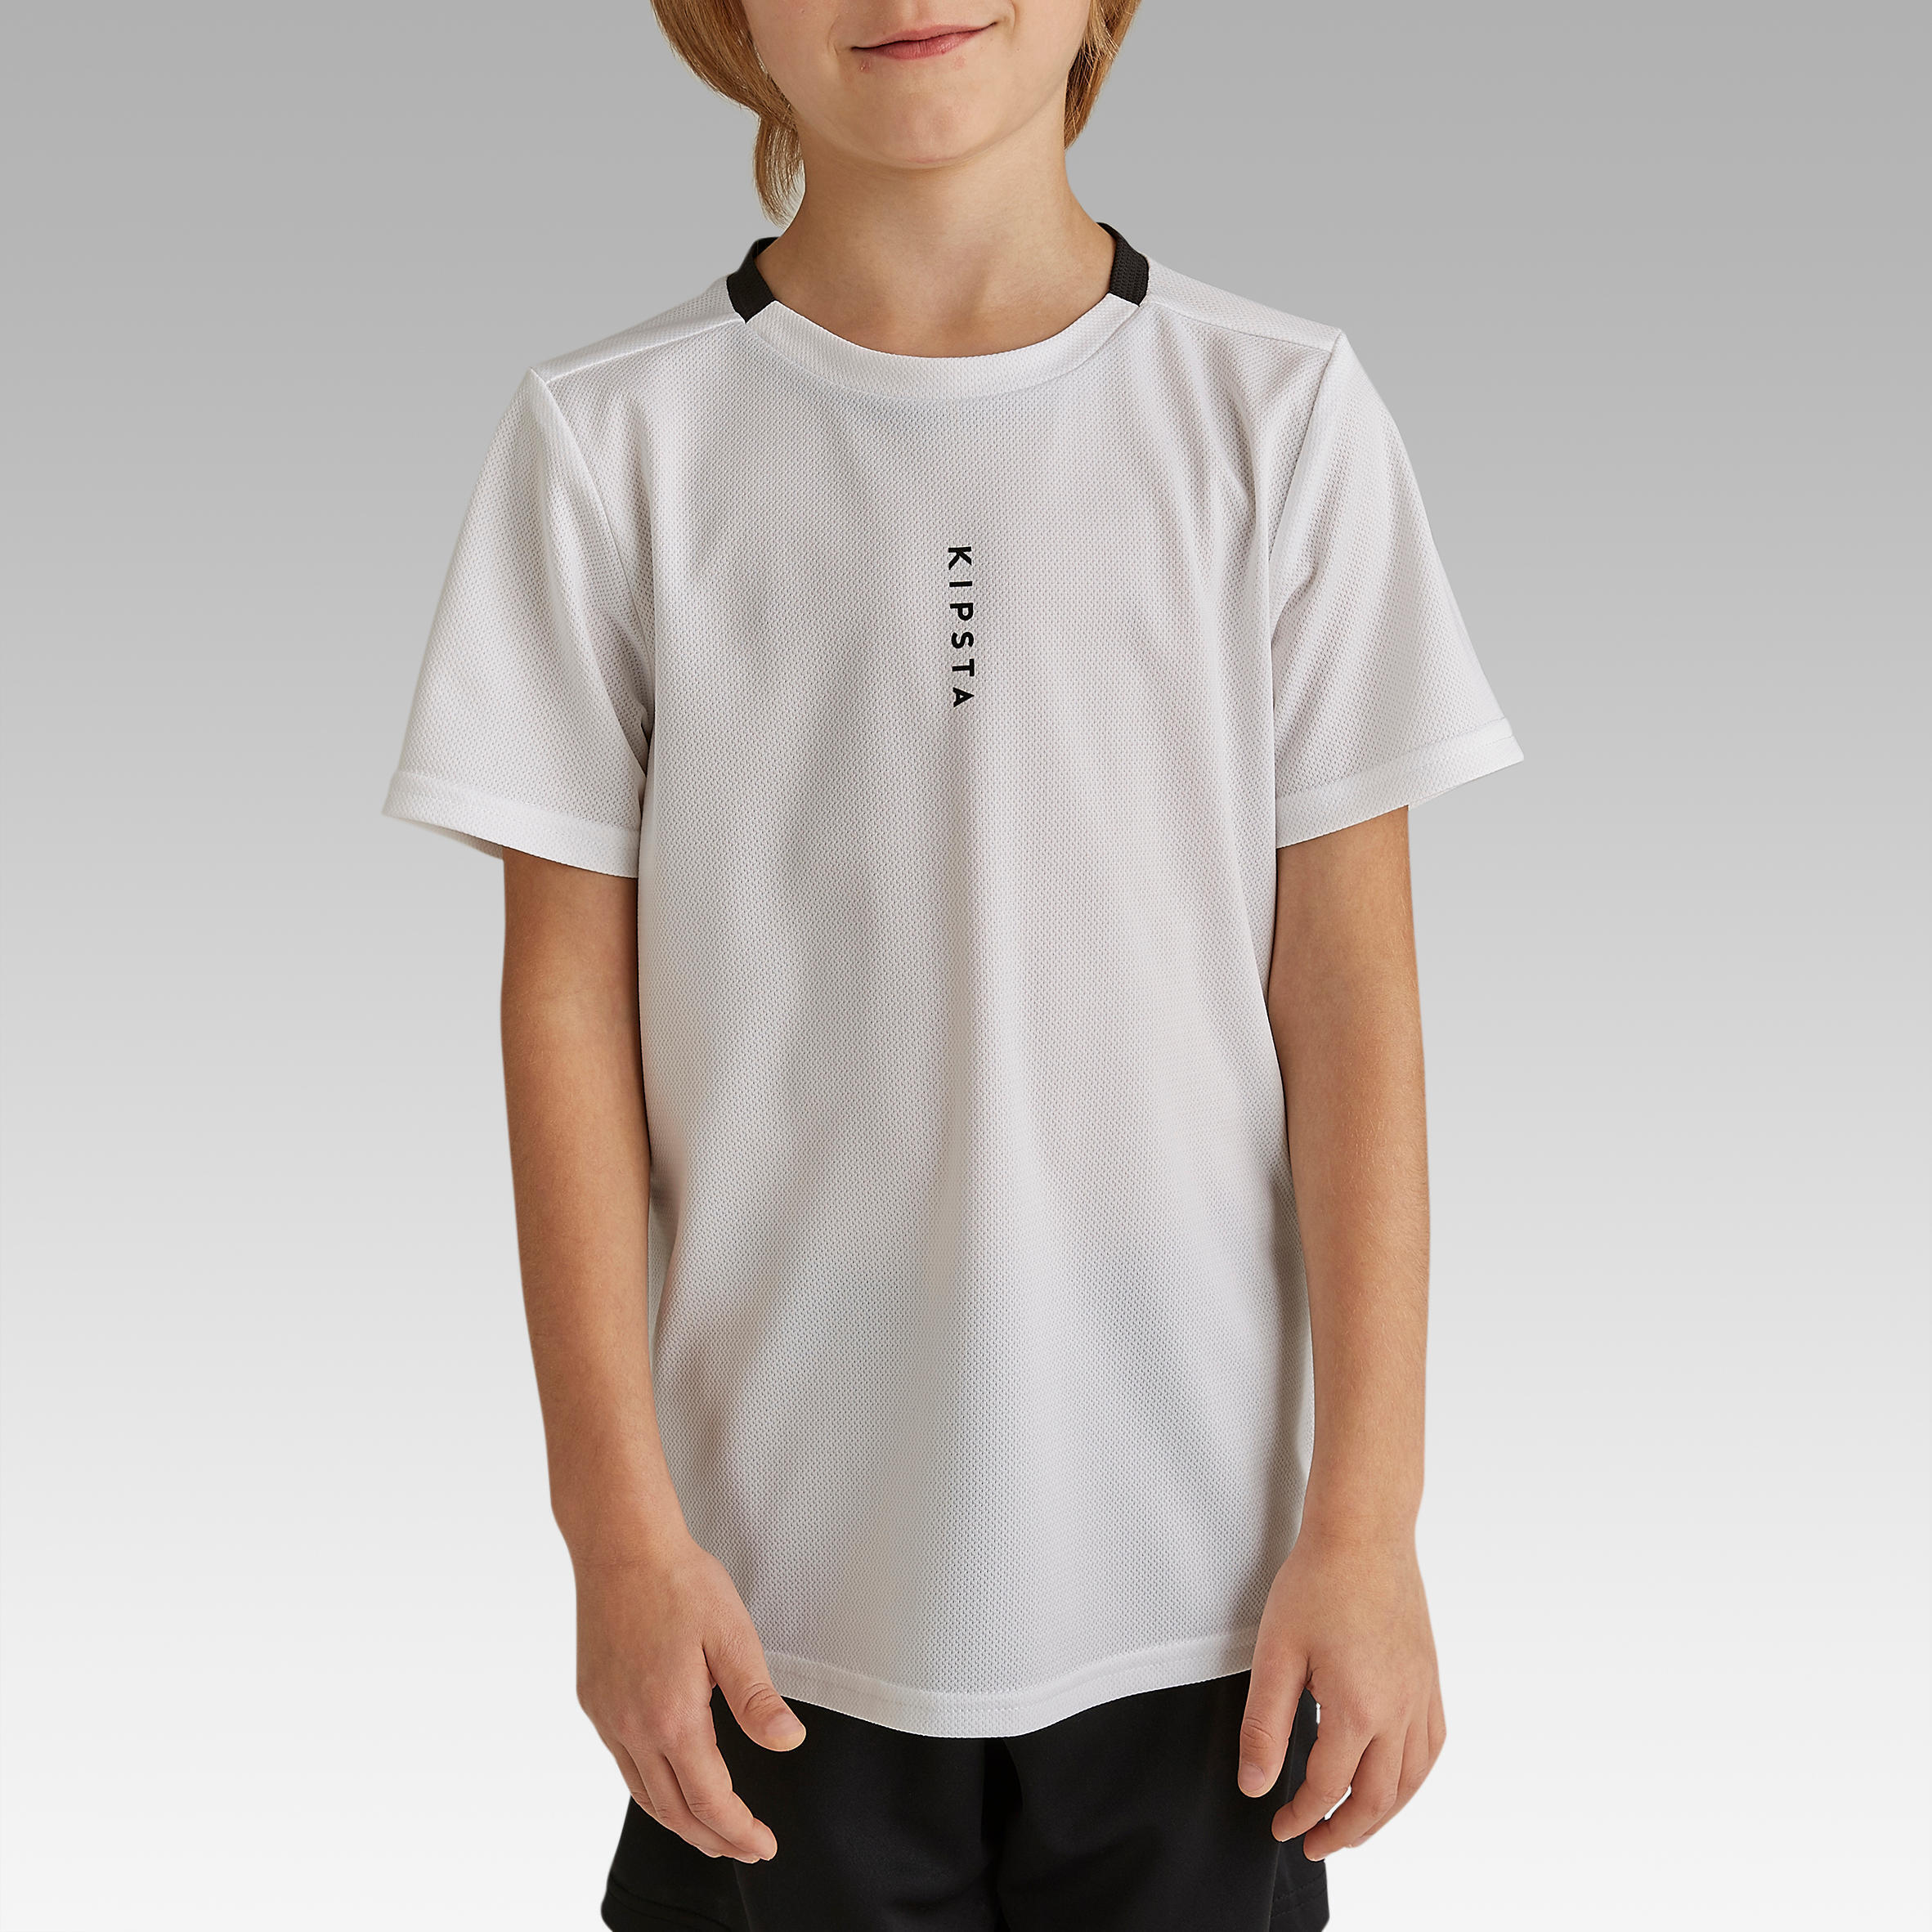 Refurbished Kids Football Shirt Essential - White - A Grade 3/7